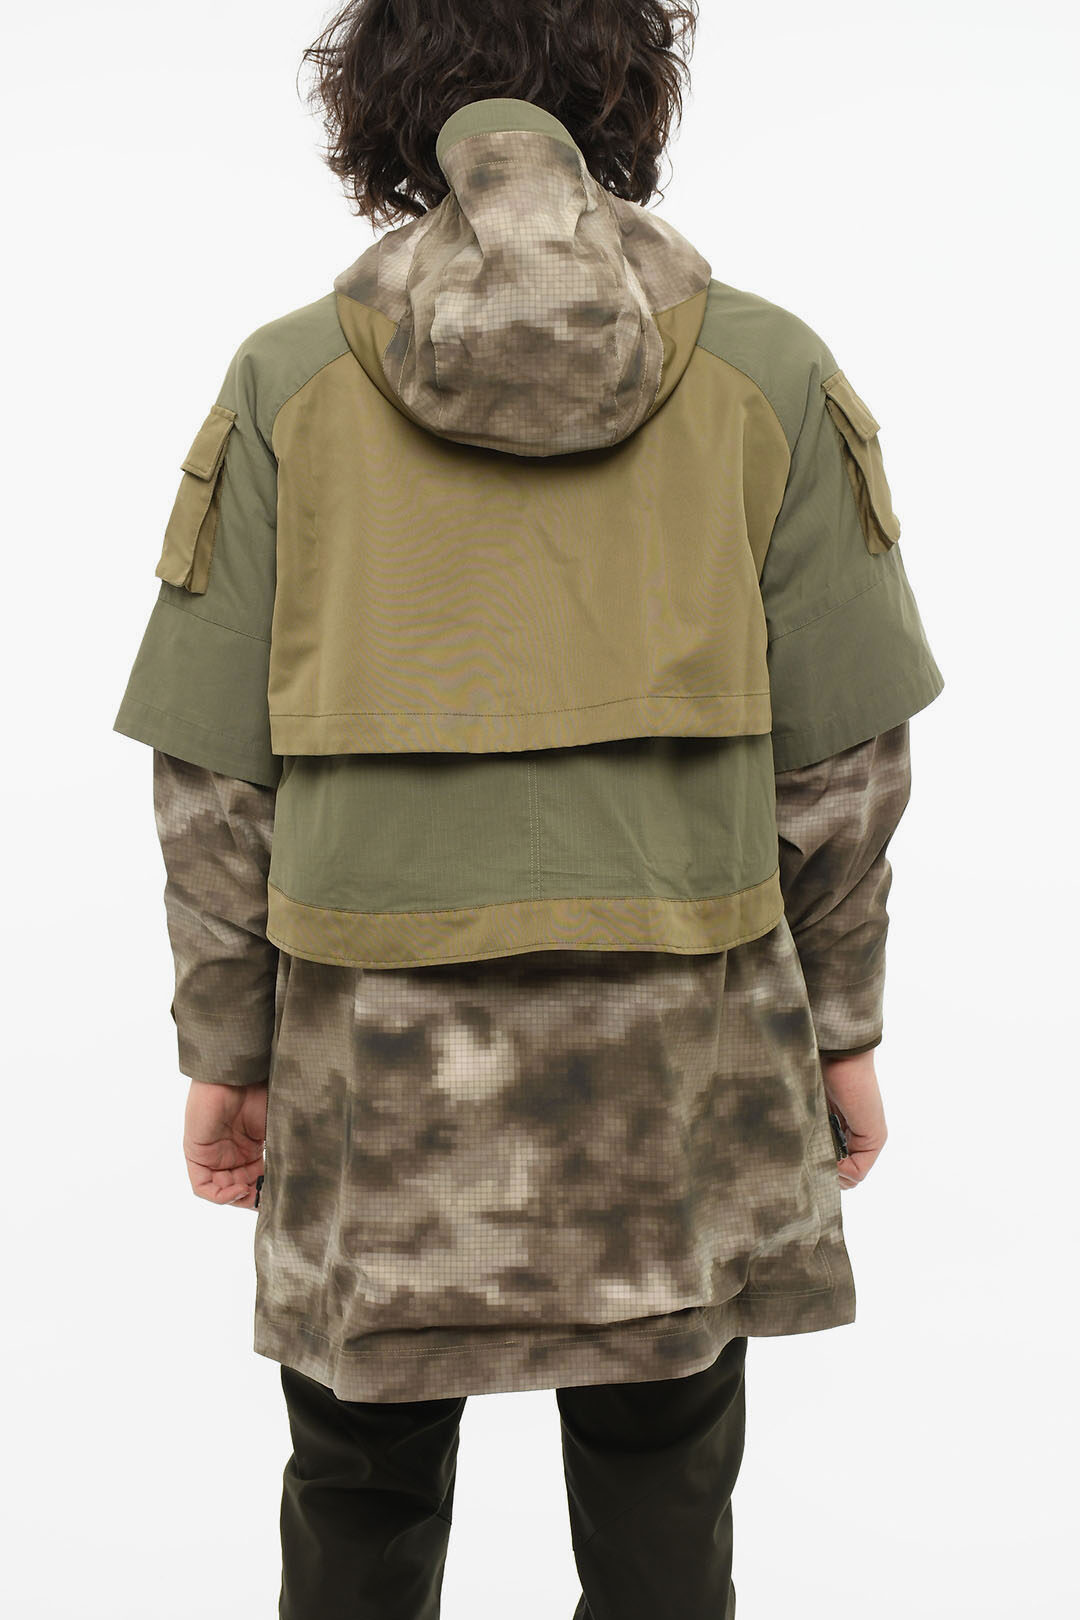 GORETEX Military Utility Jacket with Hood